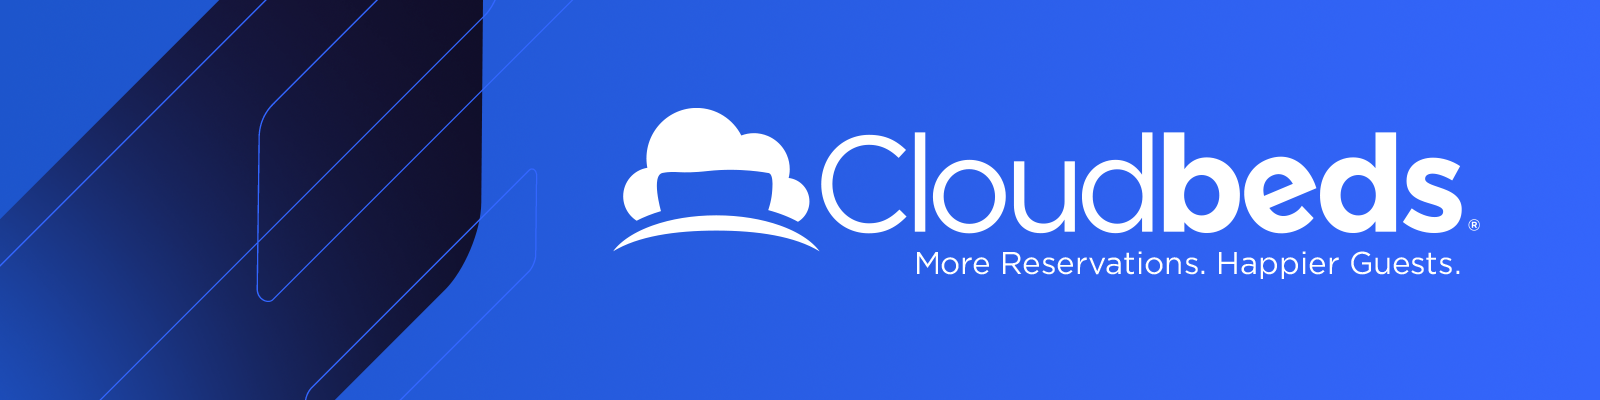 Review Cloudbeds Hospitality Software: Hotel Management Software - Appvizer